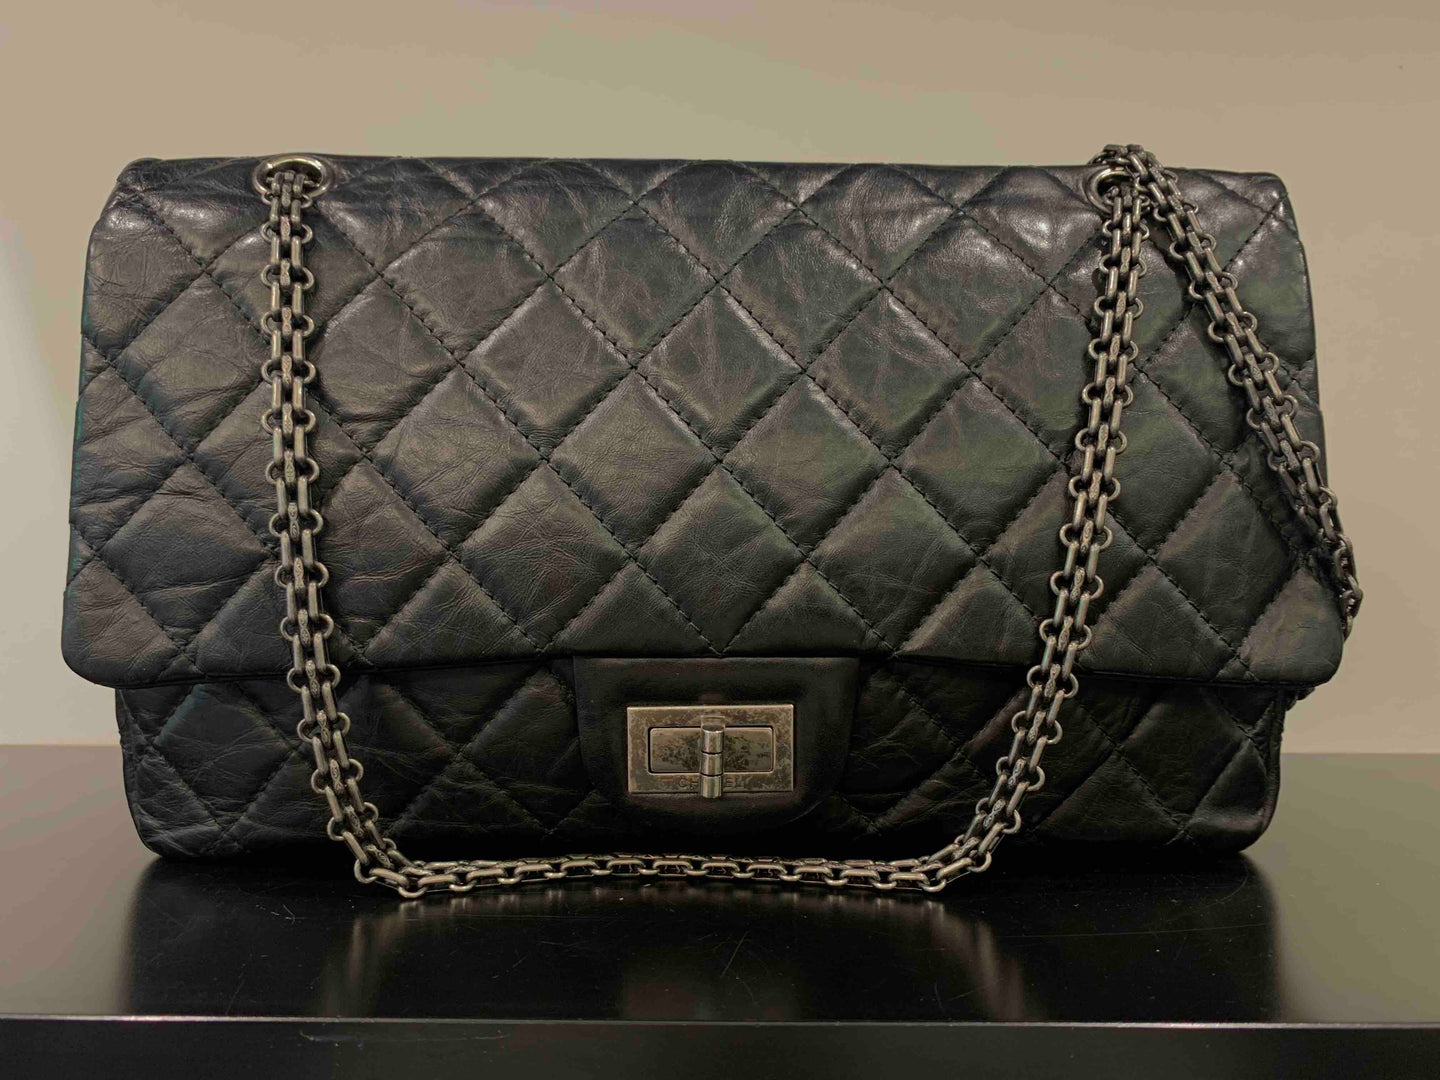 2.55 Black Chanel Bag